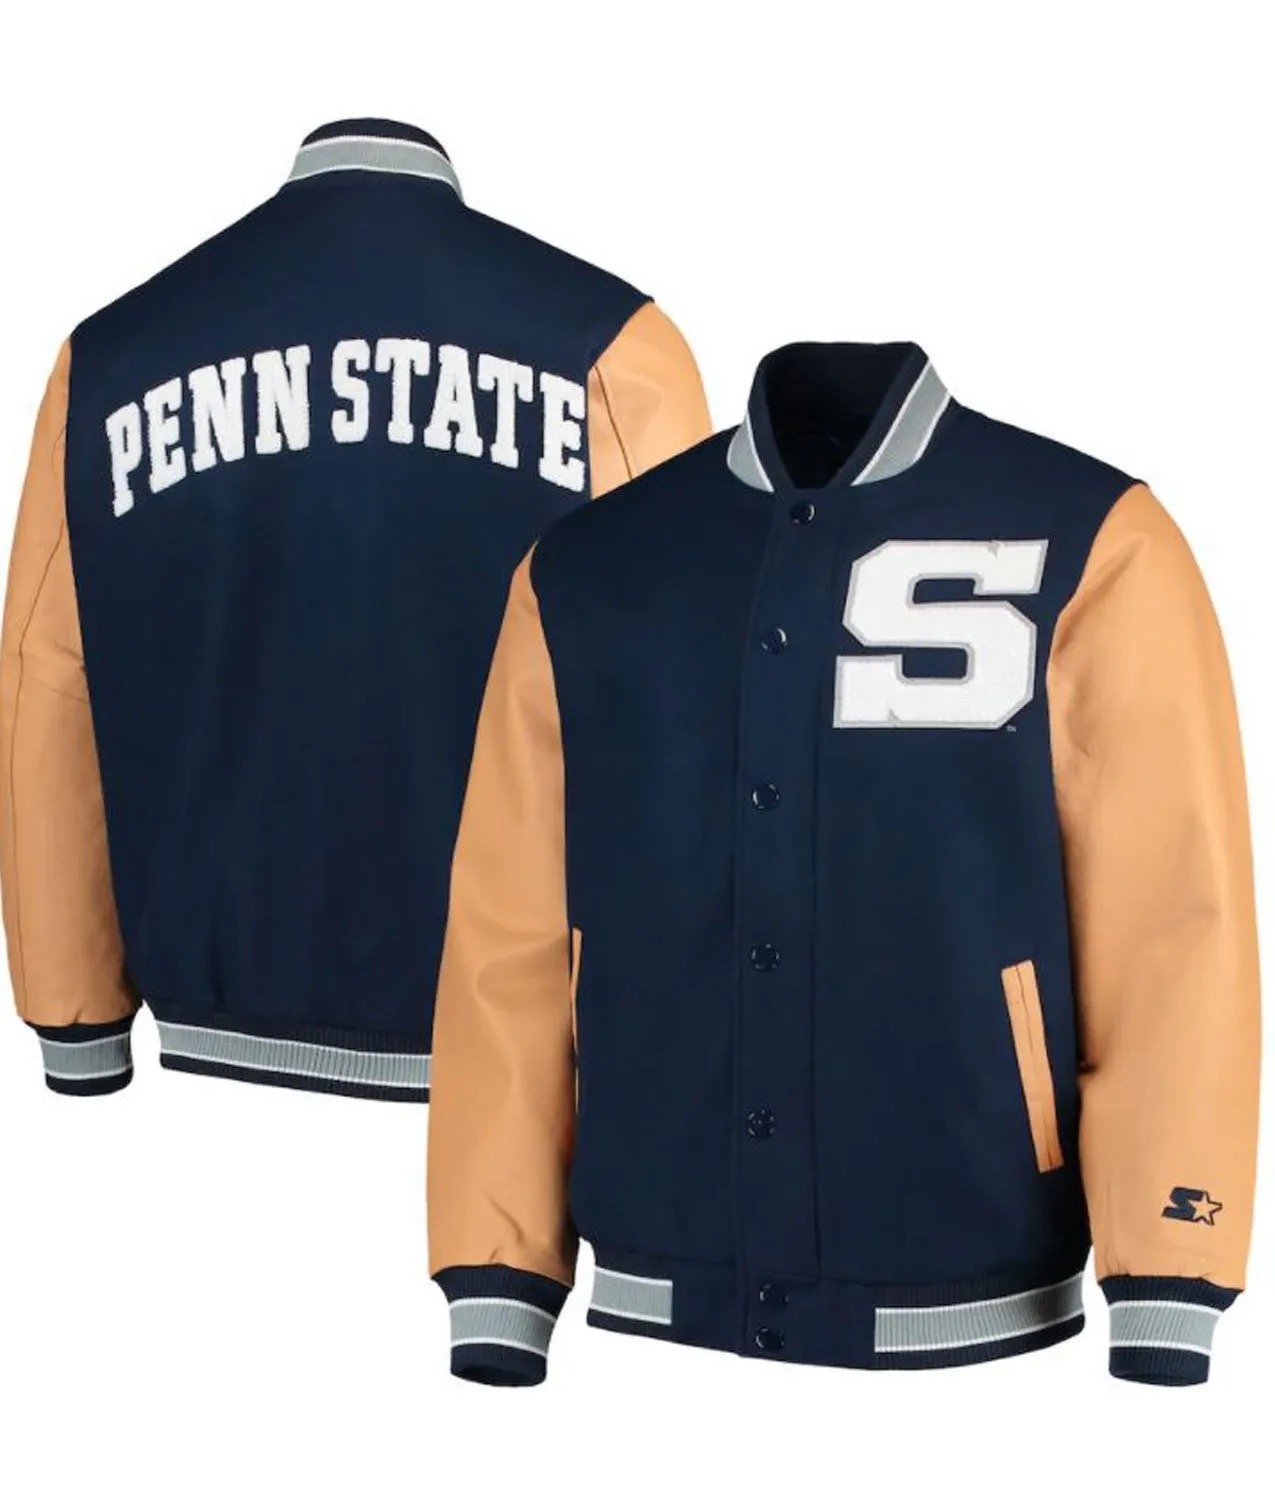 Penn State Wool Varsity Jacket